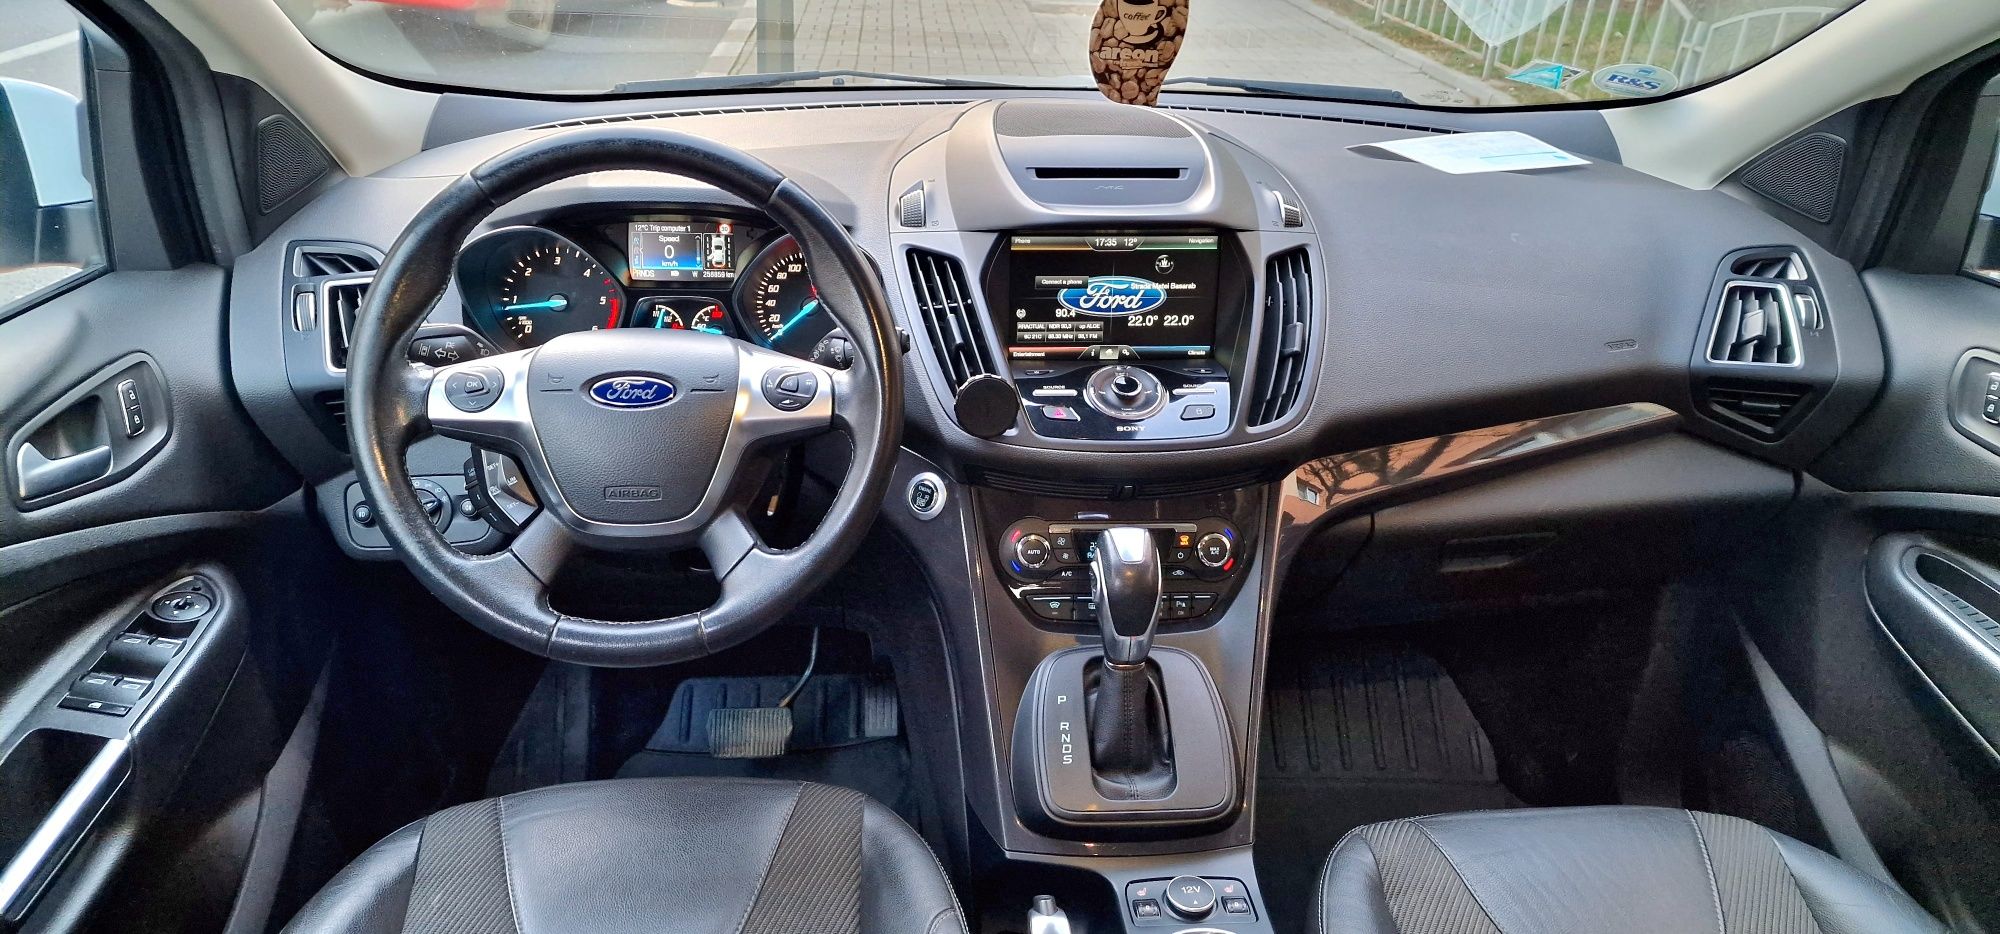 Ford Kuga 2016 TDCI 4×4 2.0 Diese Euro 6l